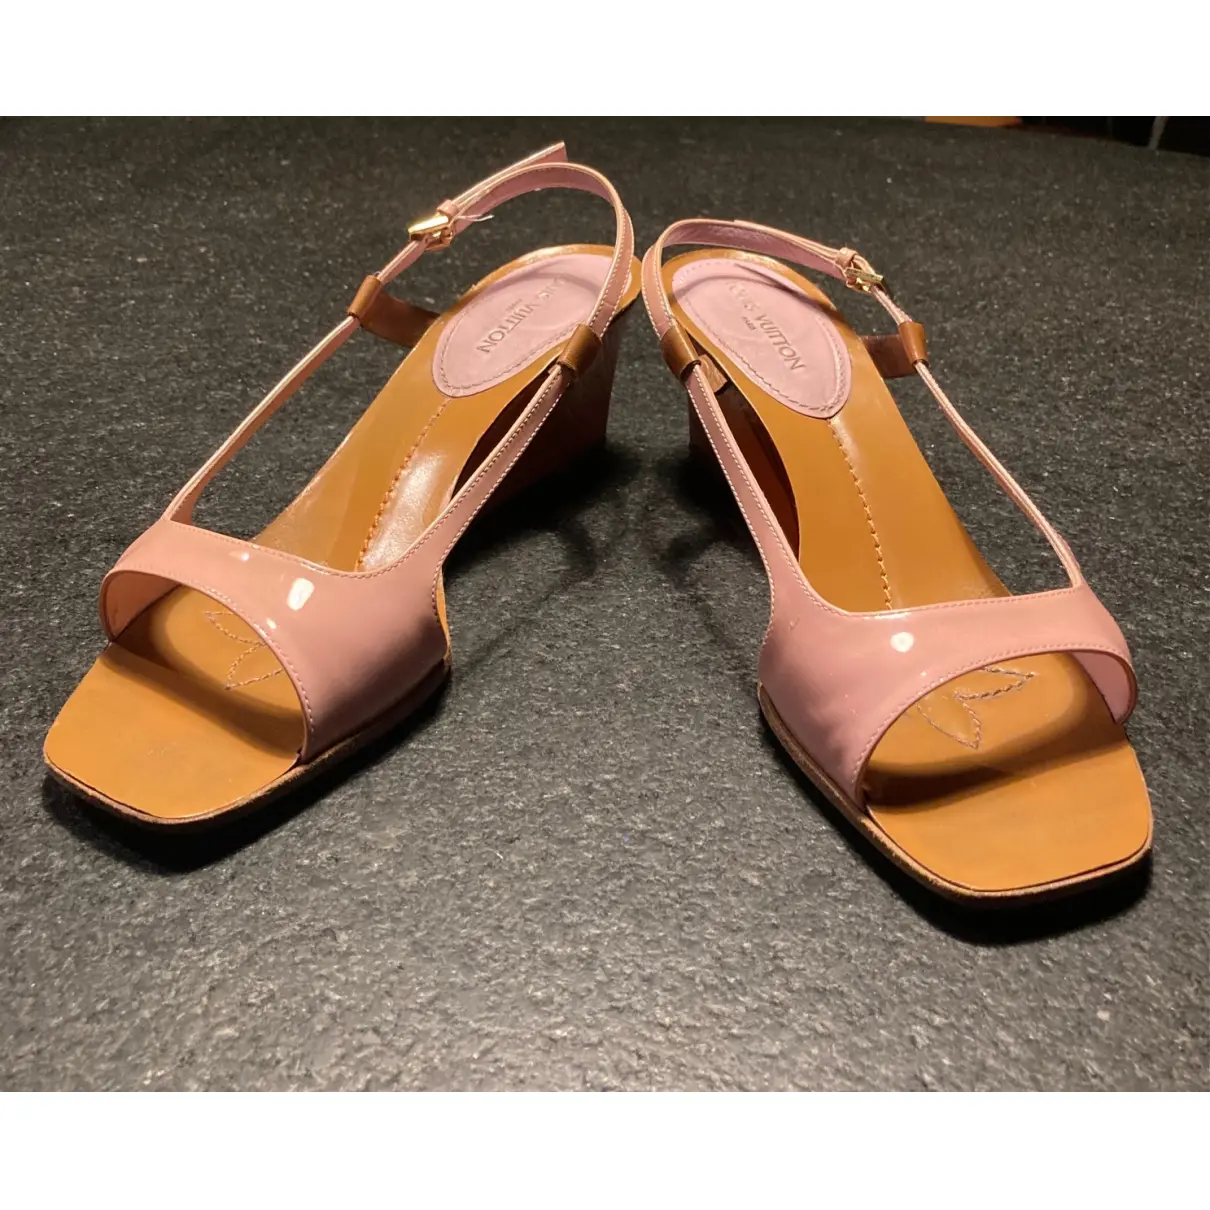 Buy Louis Vuitton Patent leather sandals online